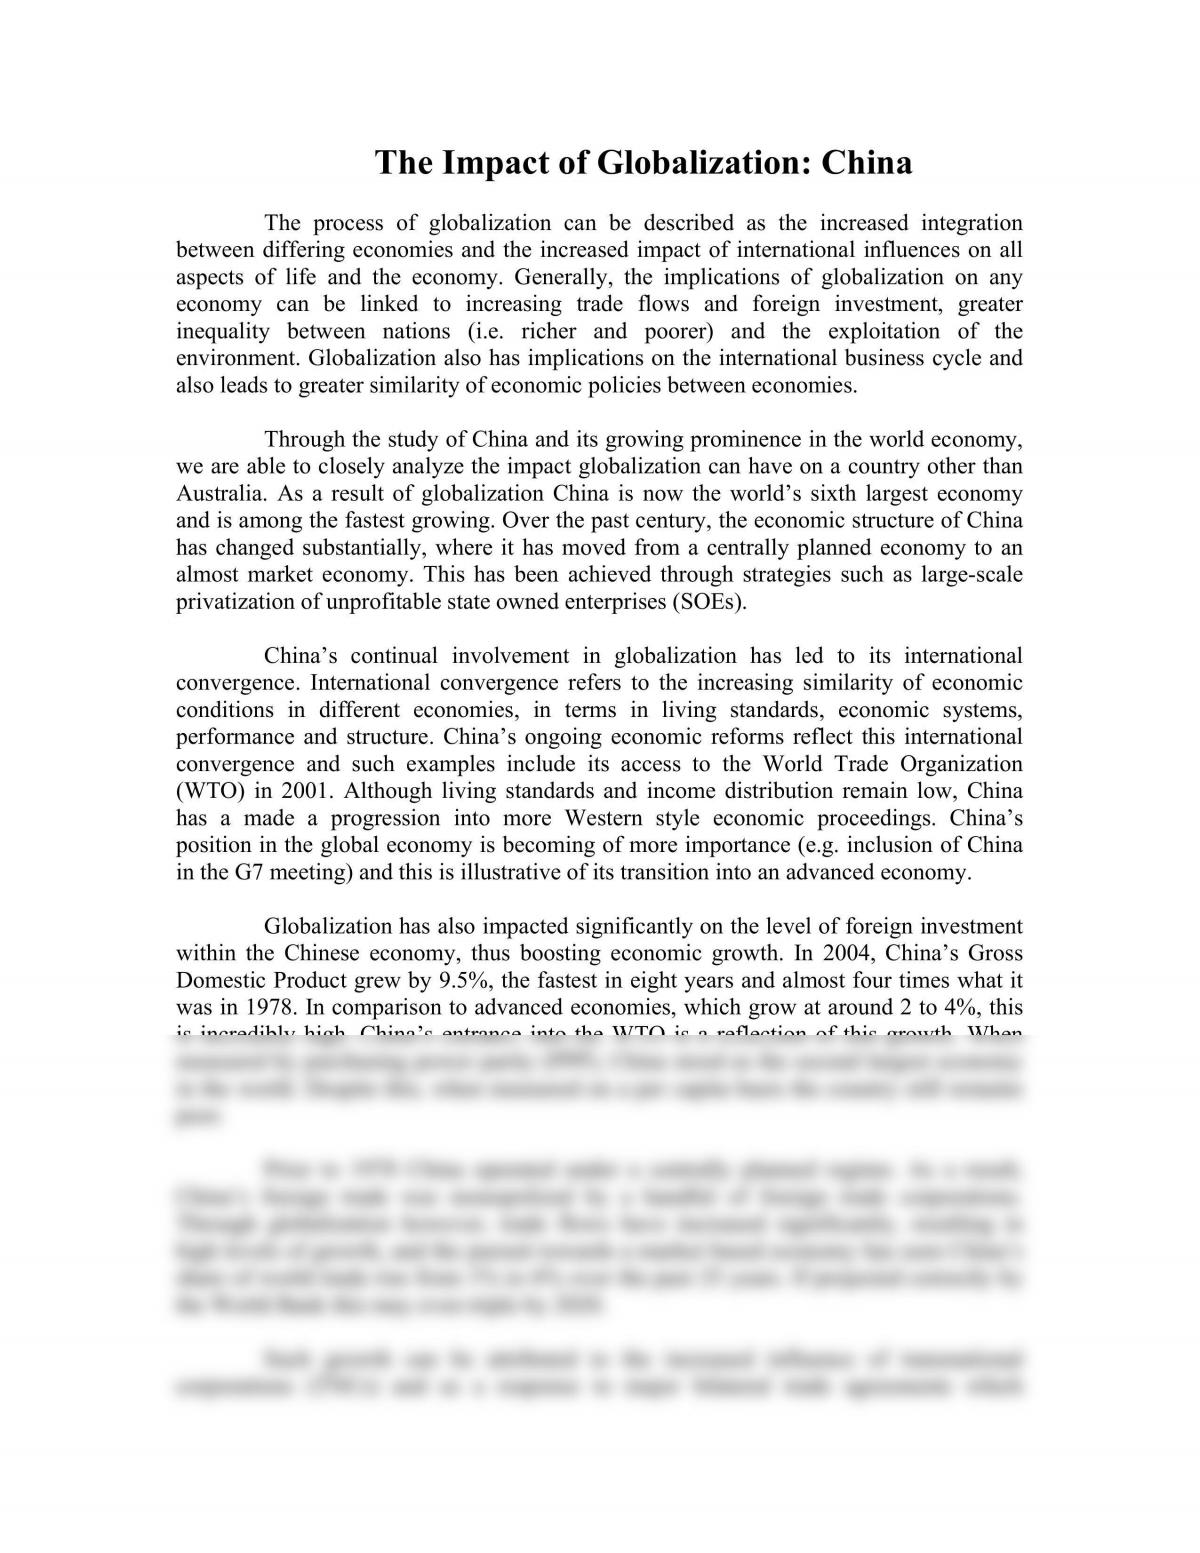 globalization essay css pdf